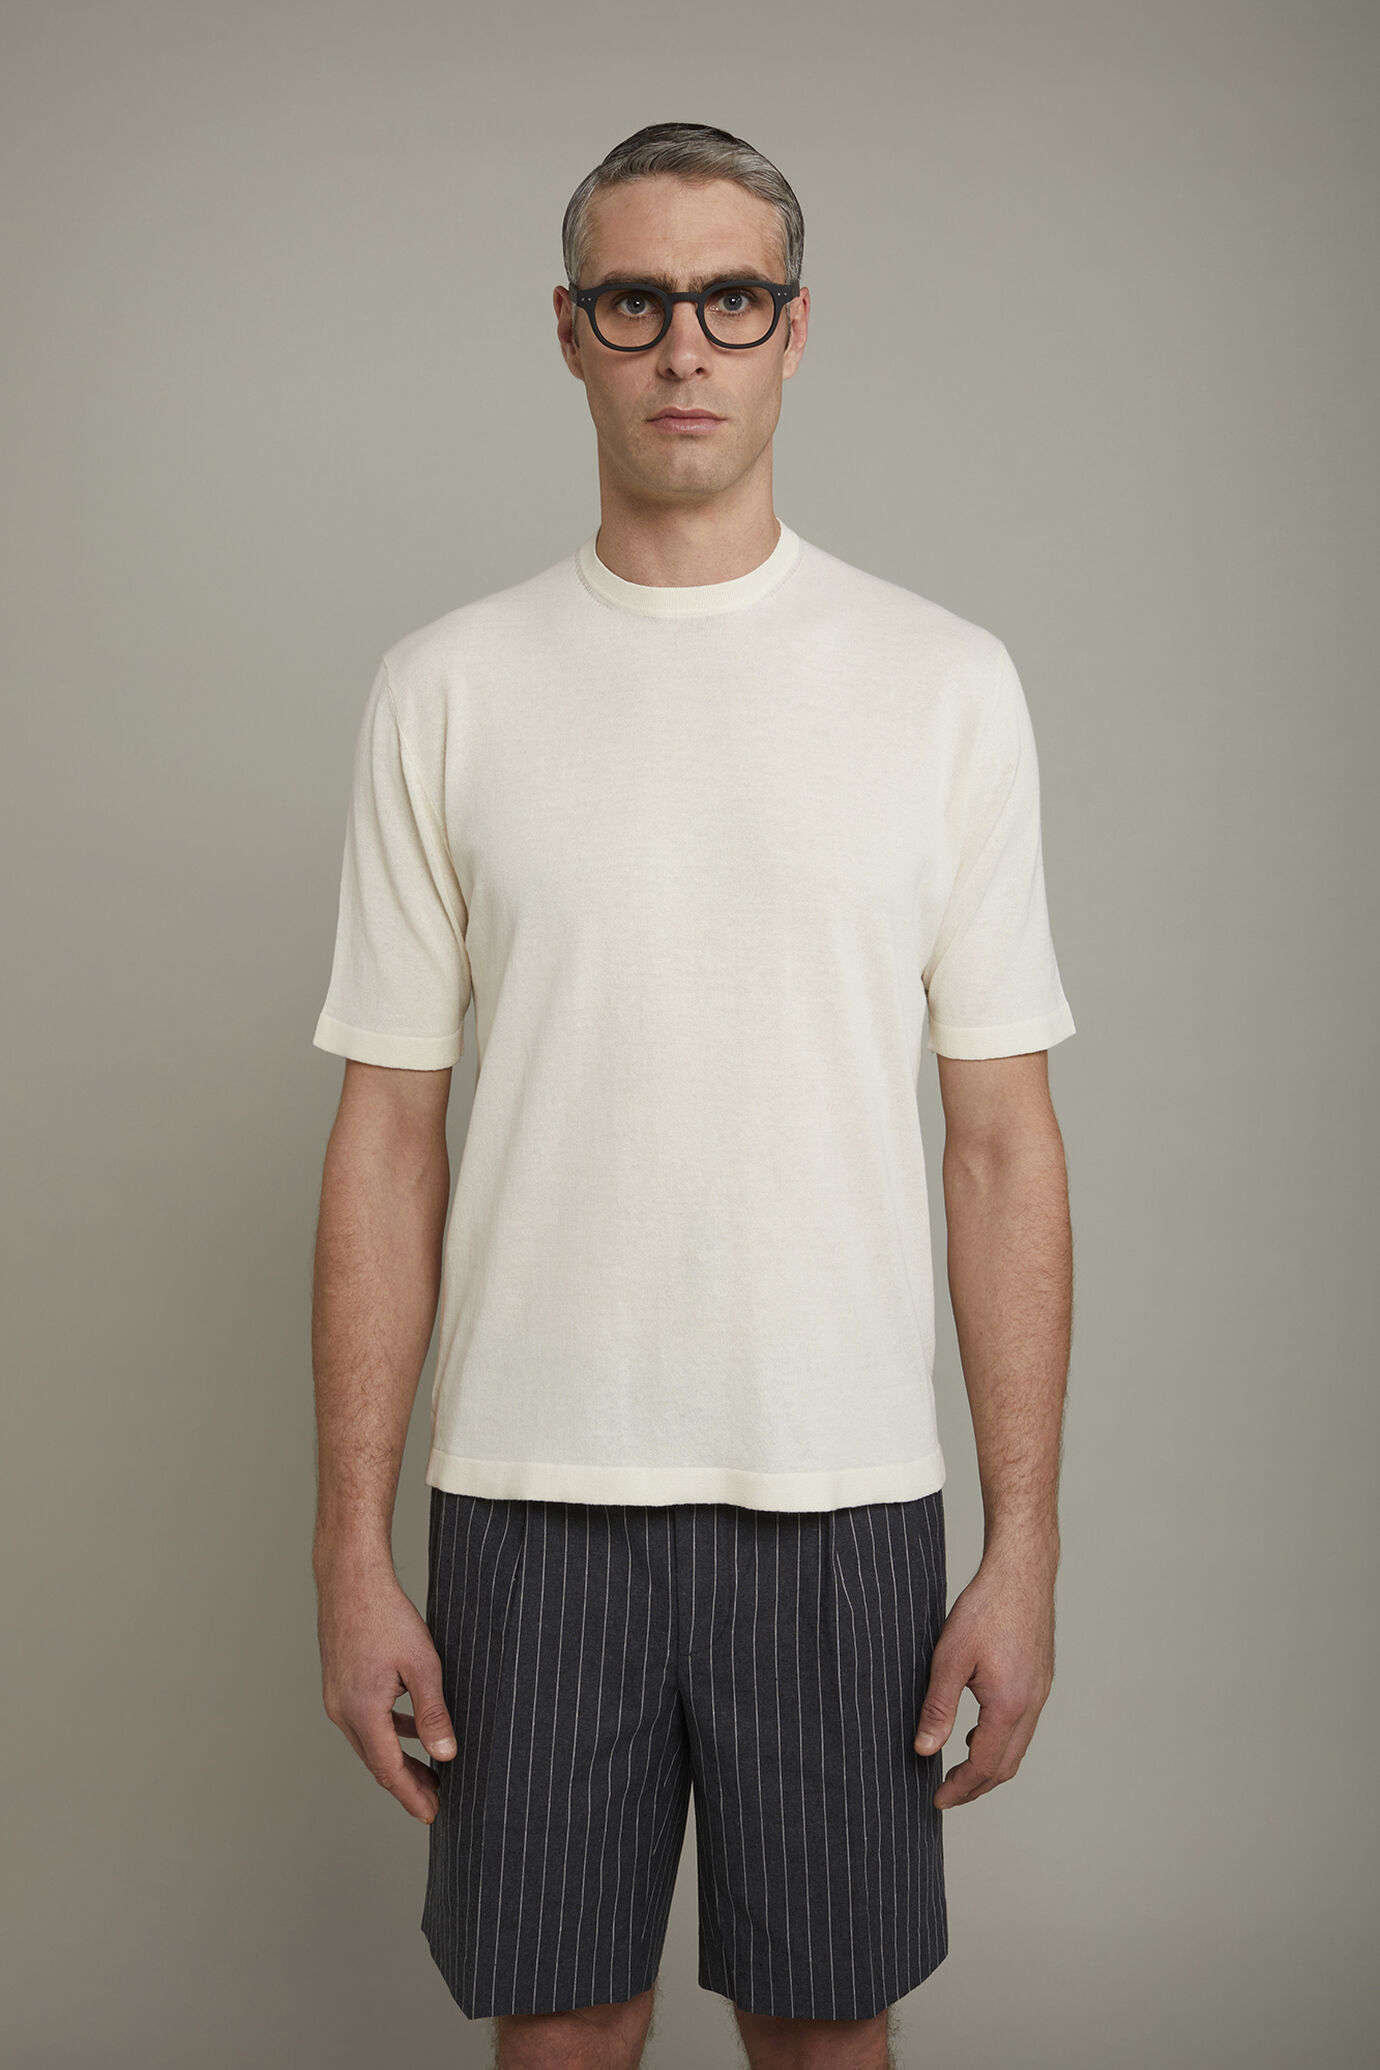 Men's knitted t-shirt 100% cotton short-sleeved regular fit